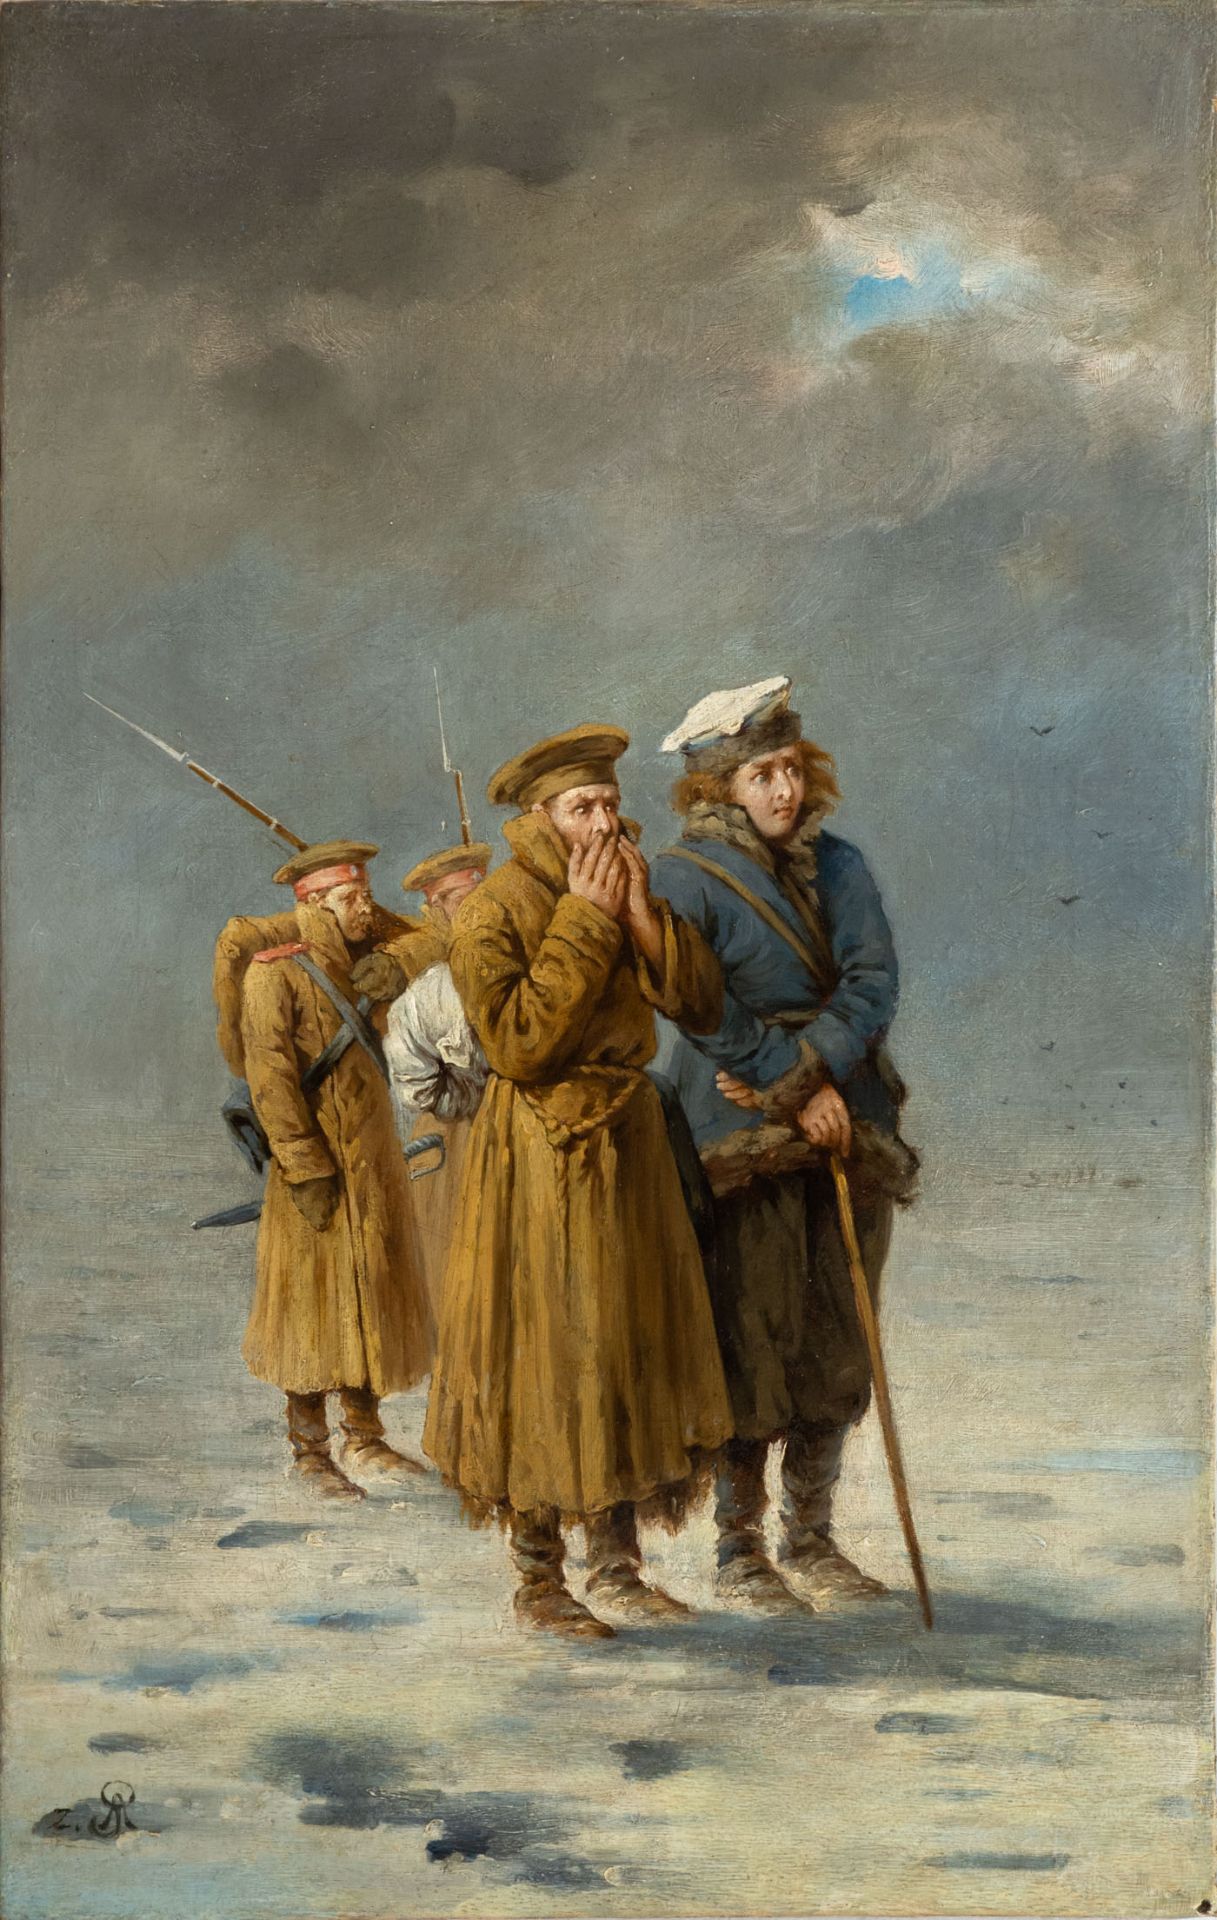 Artur Grottger (1837-1867), March to Siberia